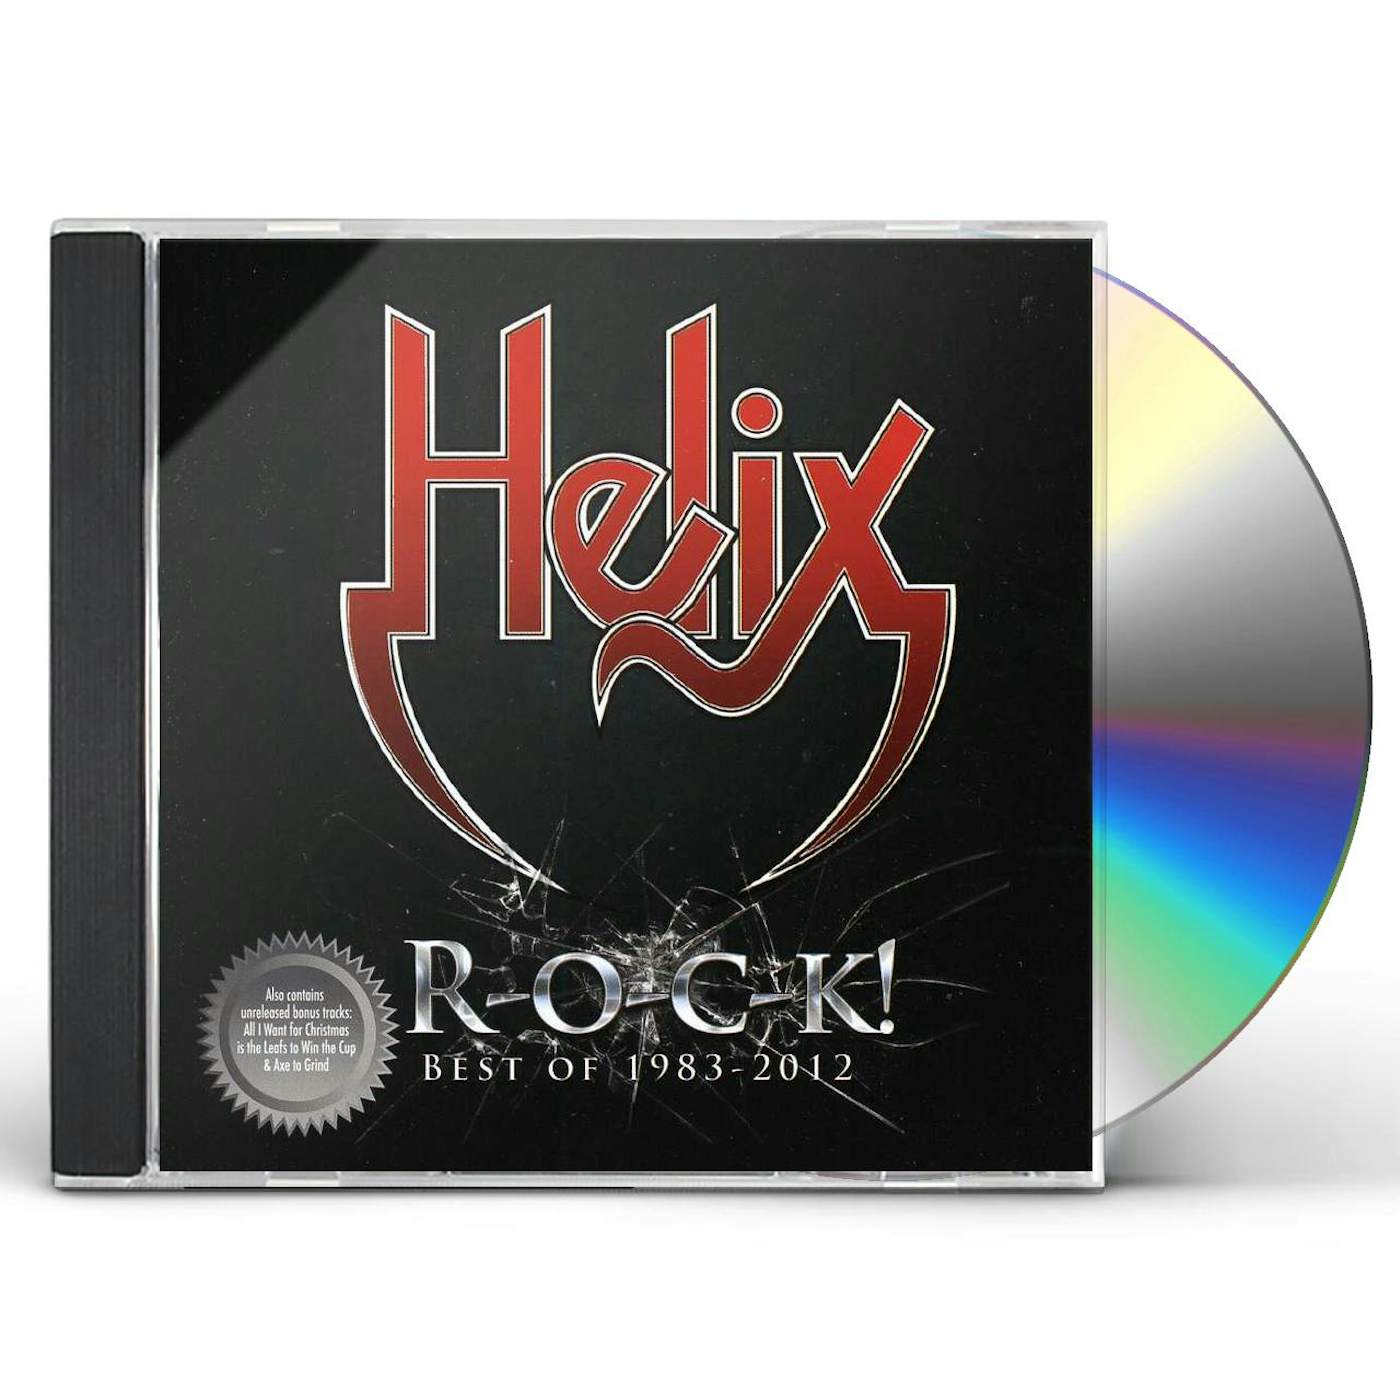 Helix R-O-C-K BEST OF 1983-2012 CD